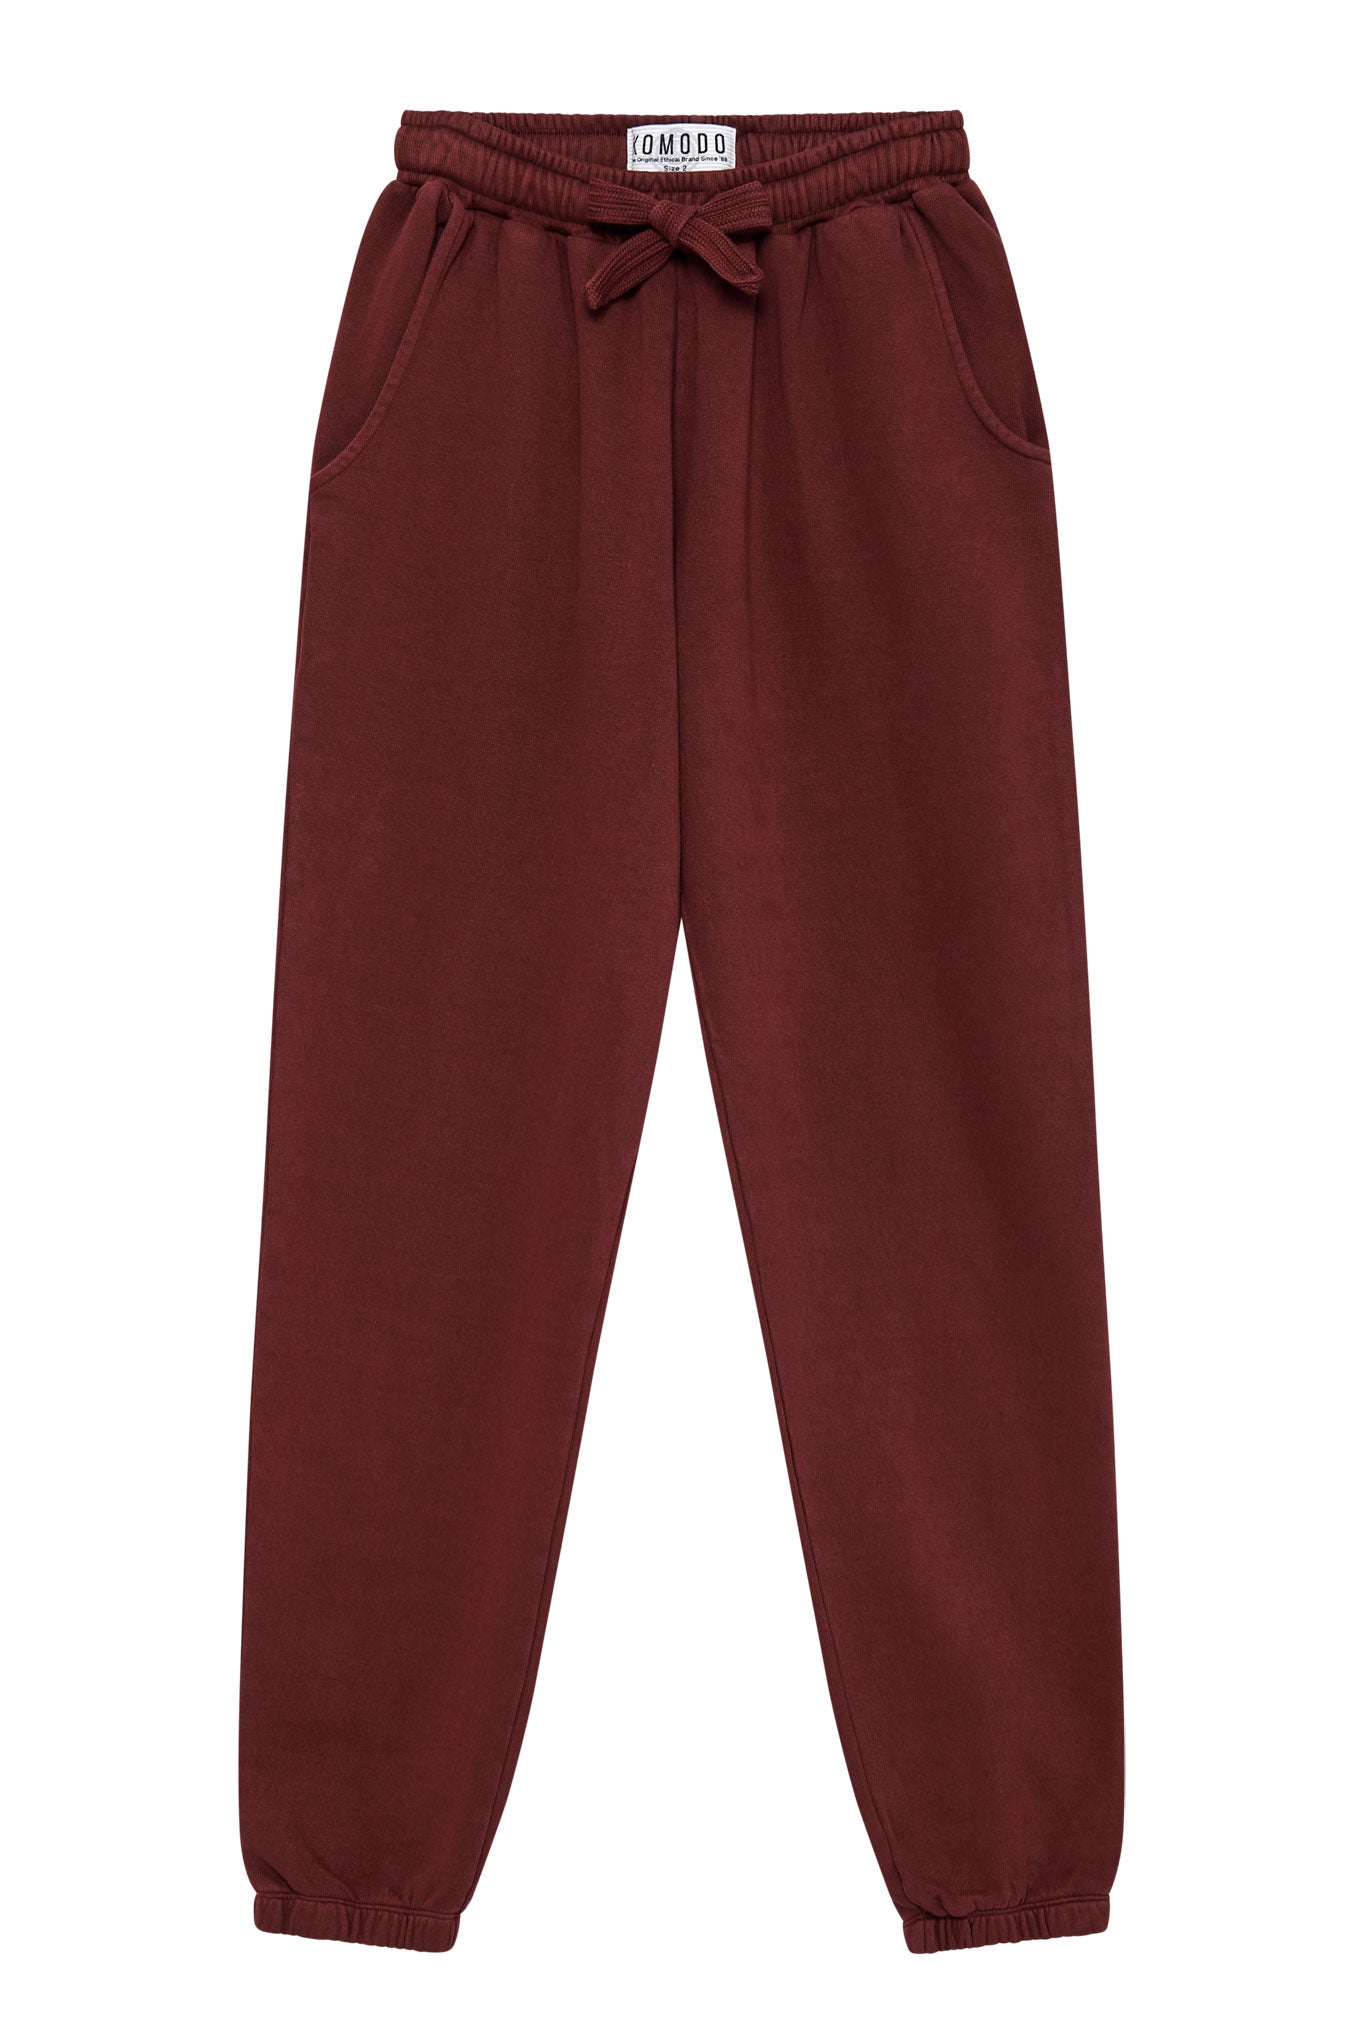 Dark red ADAM jogging pants made of 100% organic cotton from Komodo